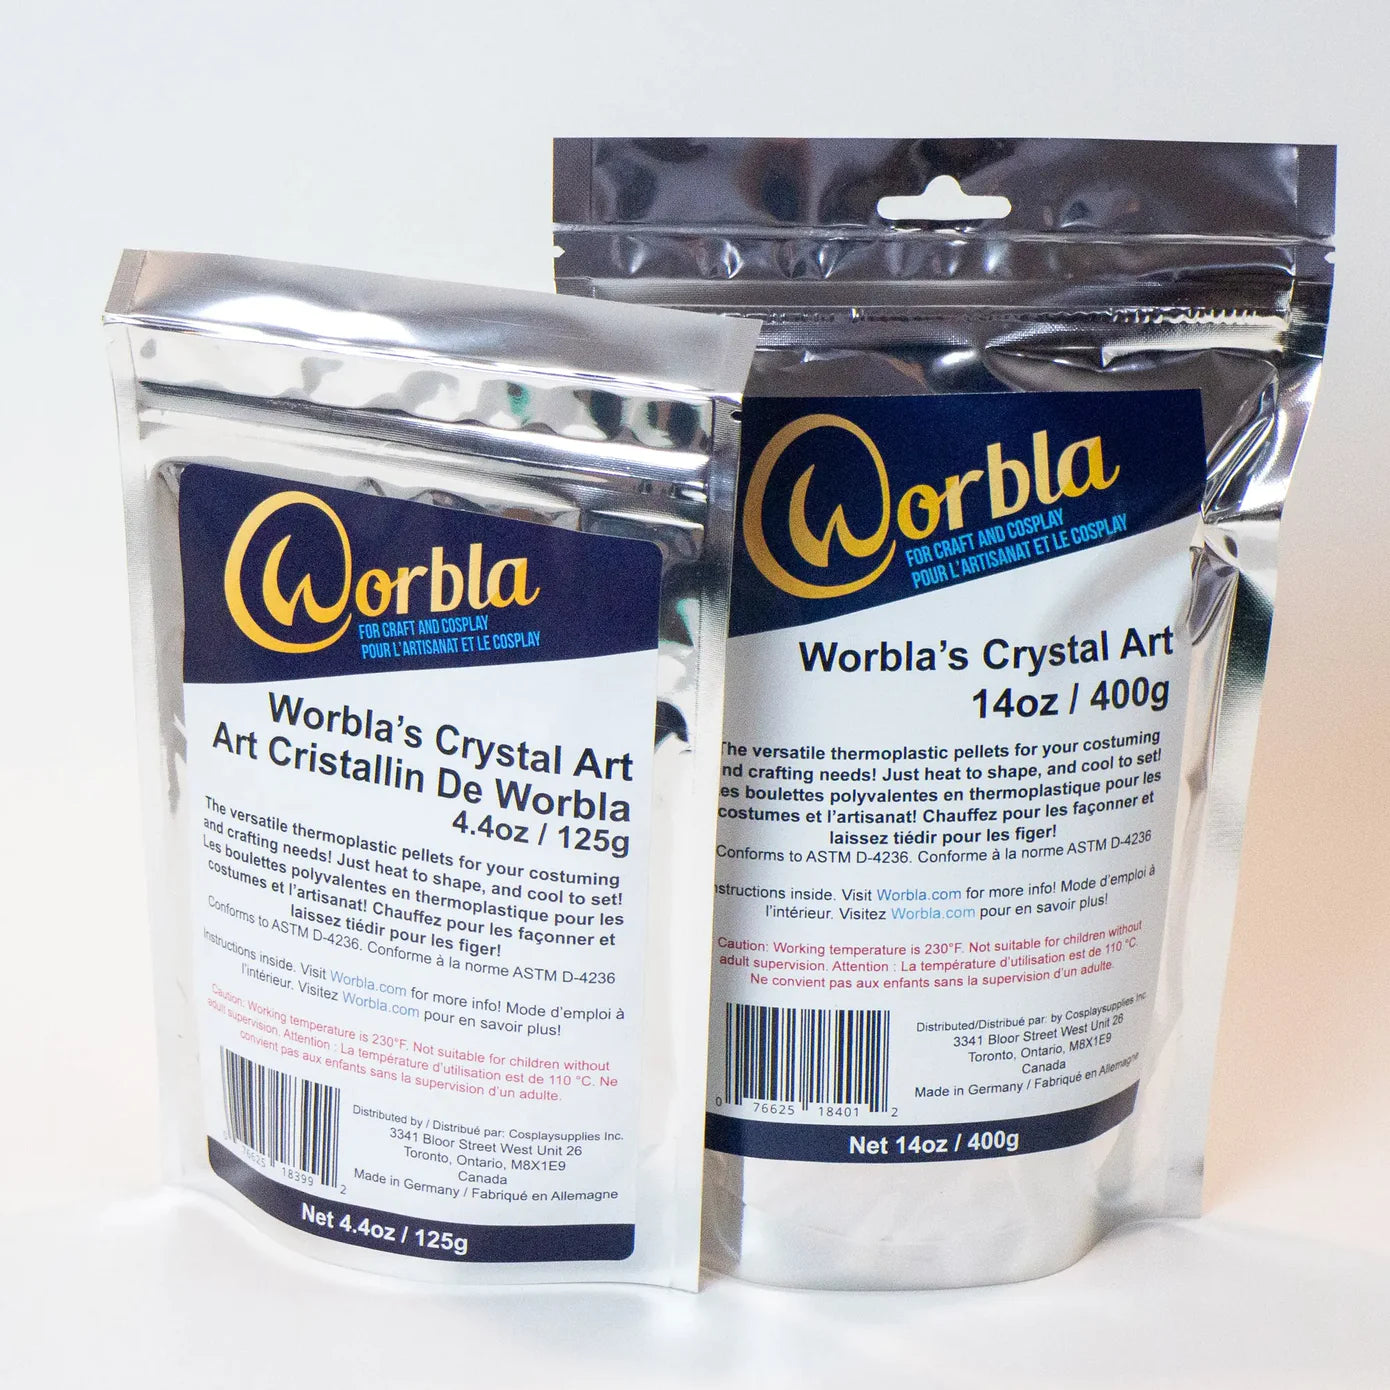 Worbla's Crystal Art